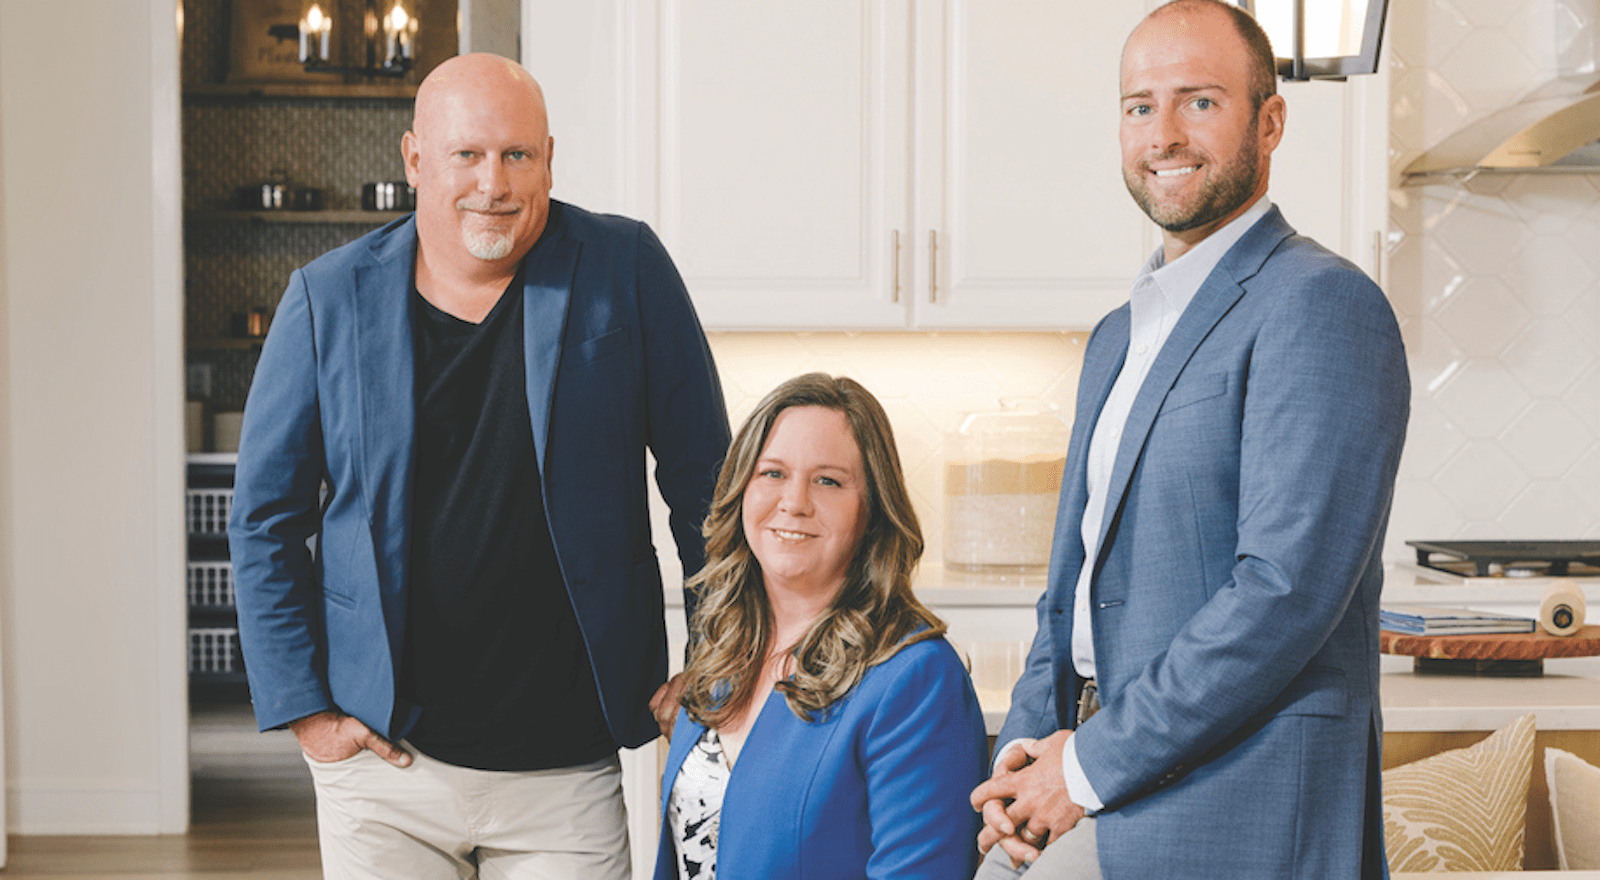 The leadership team at Van Metre Homes, Pro Builder's 2022 Builder of the Year